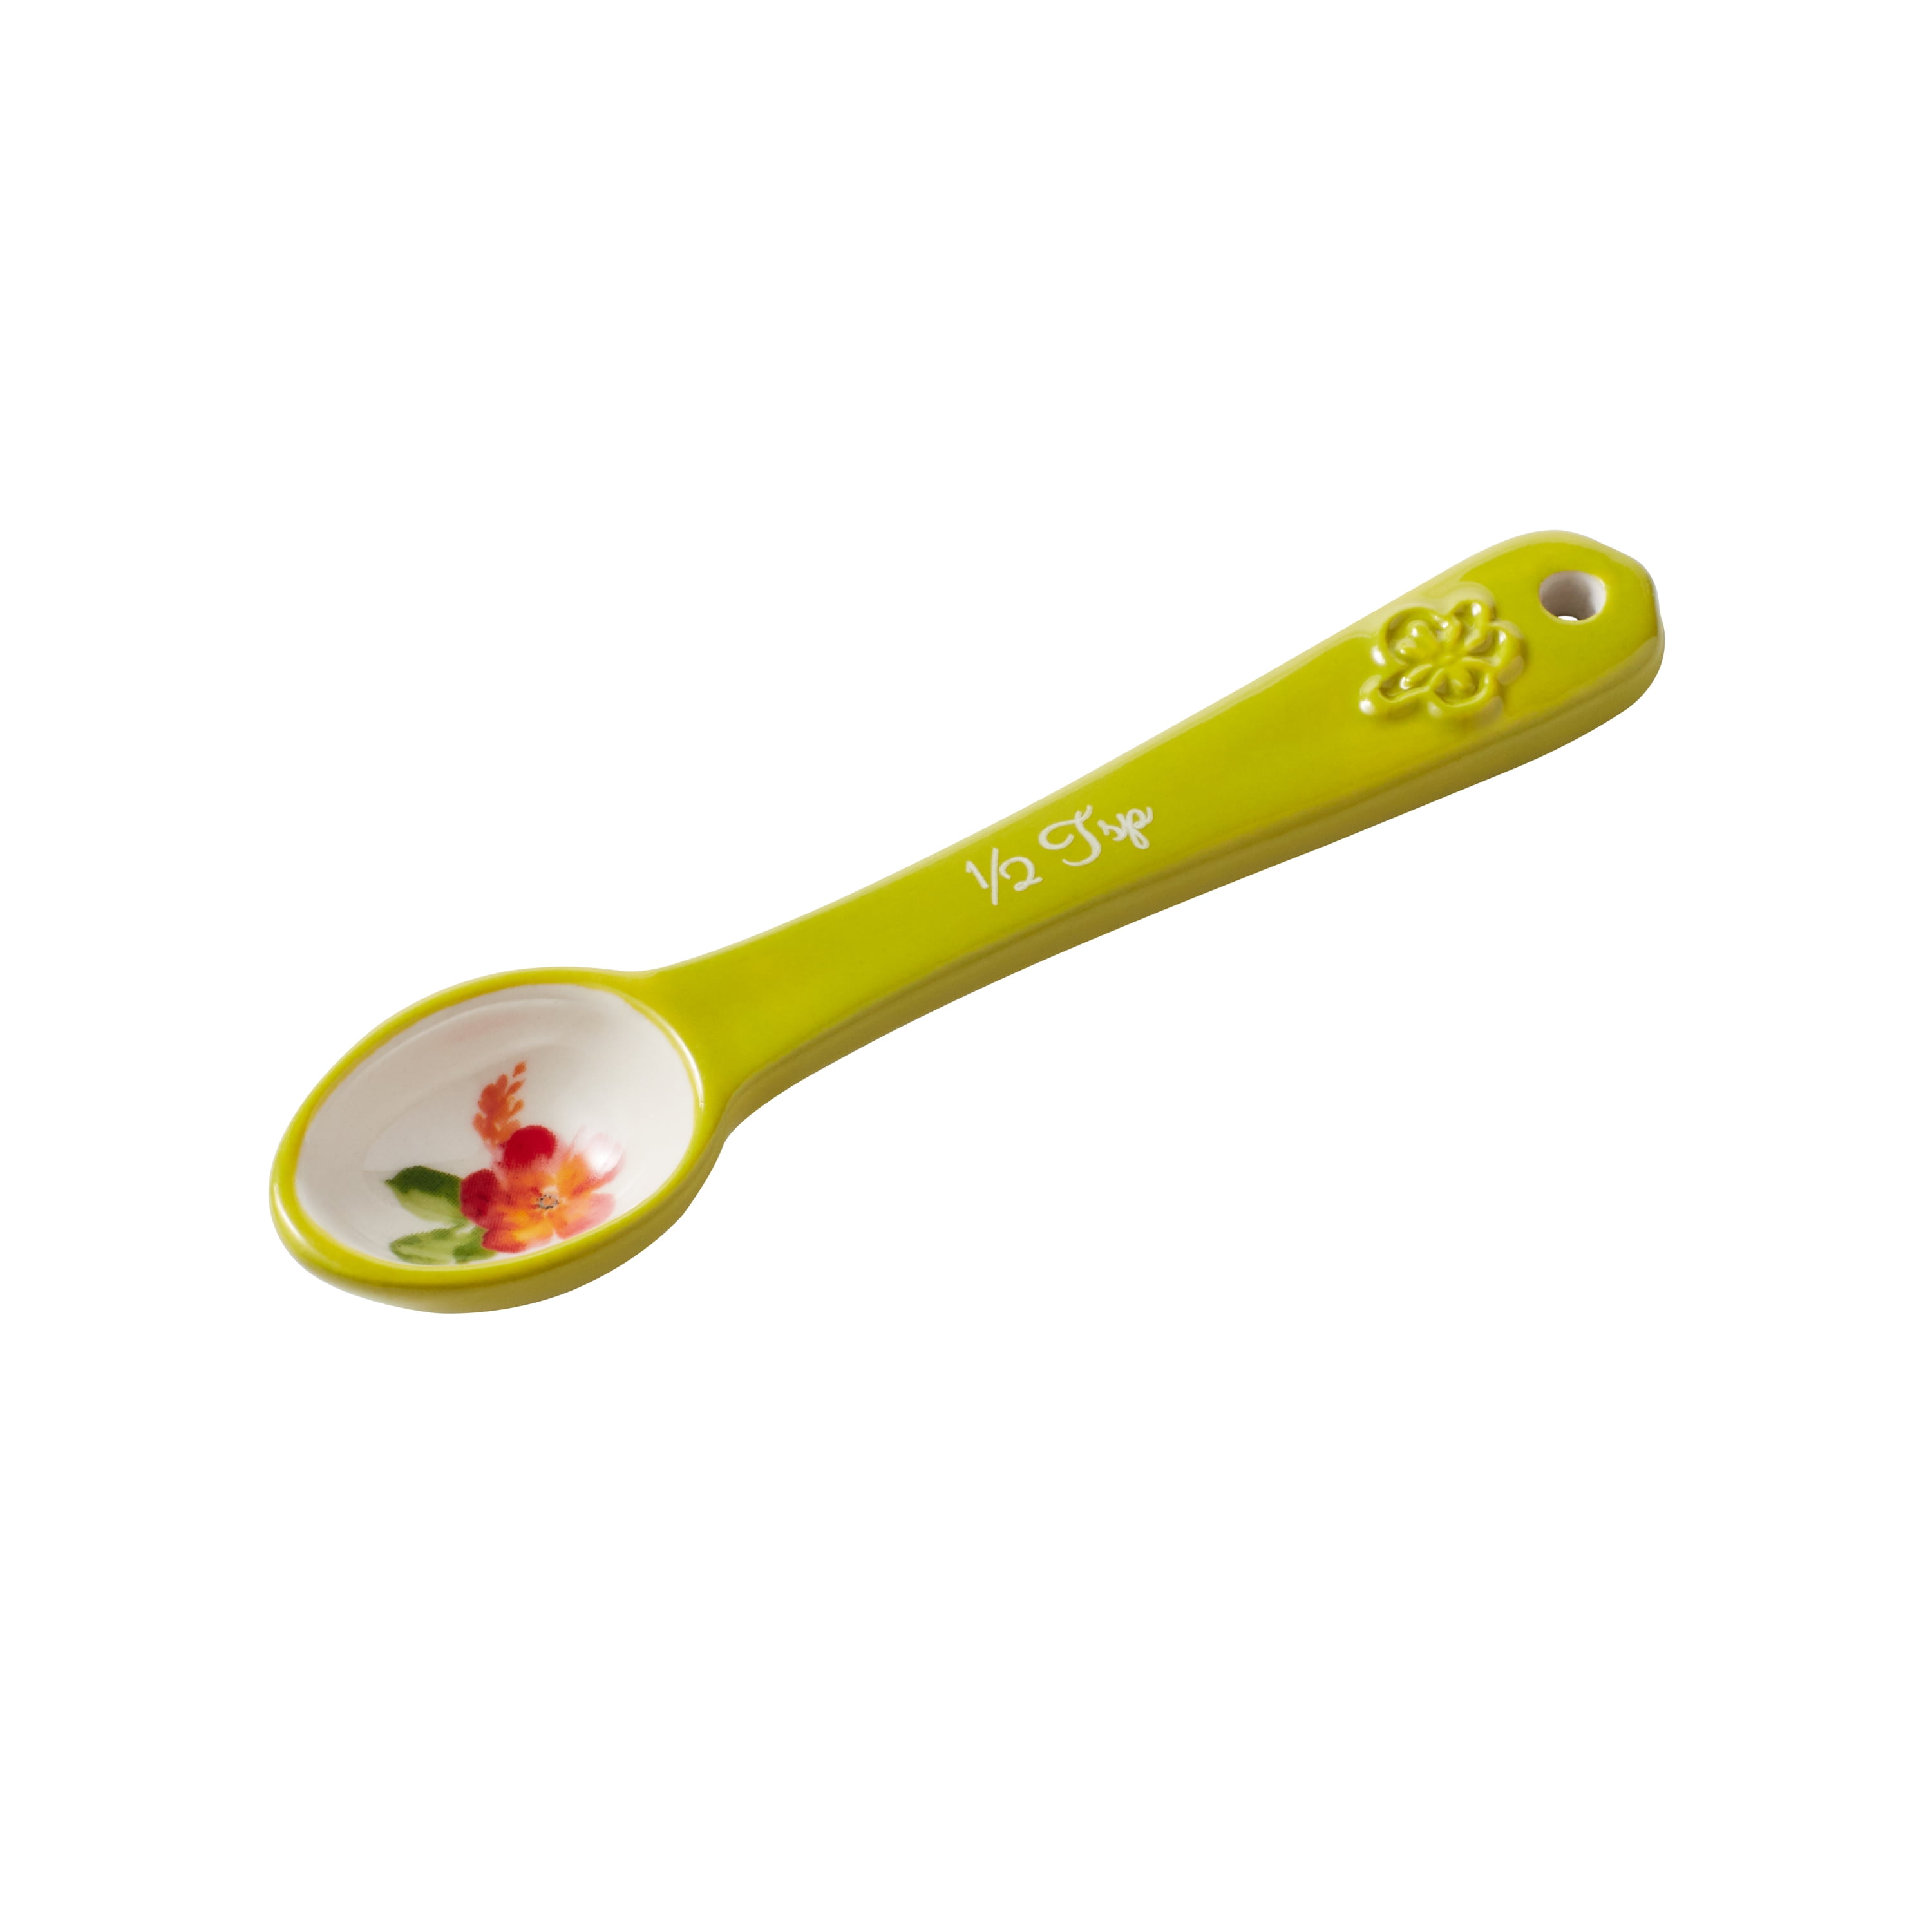 4 Pieces Ceramic Measuring Spoons Set - Cute Flower Printed Measuring Spoons